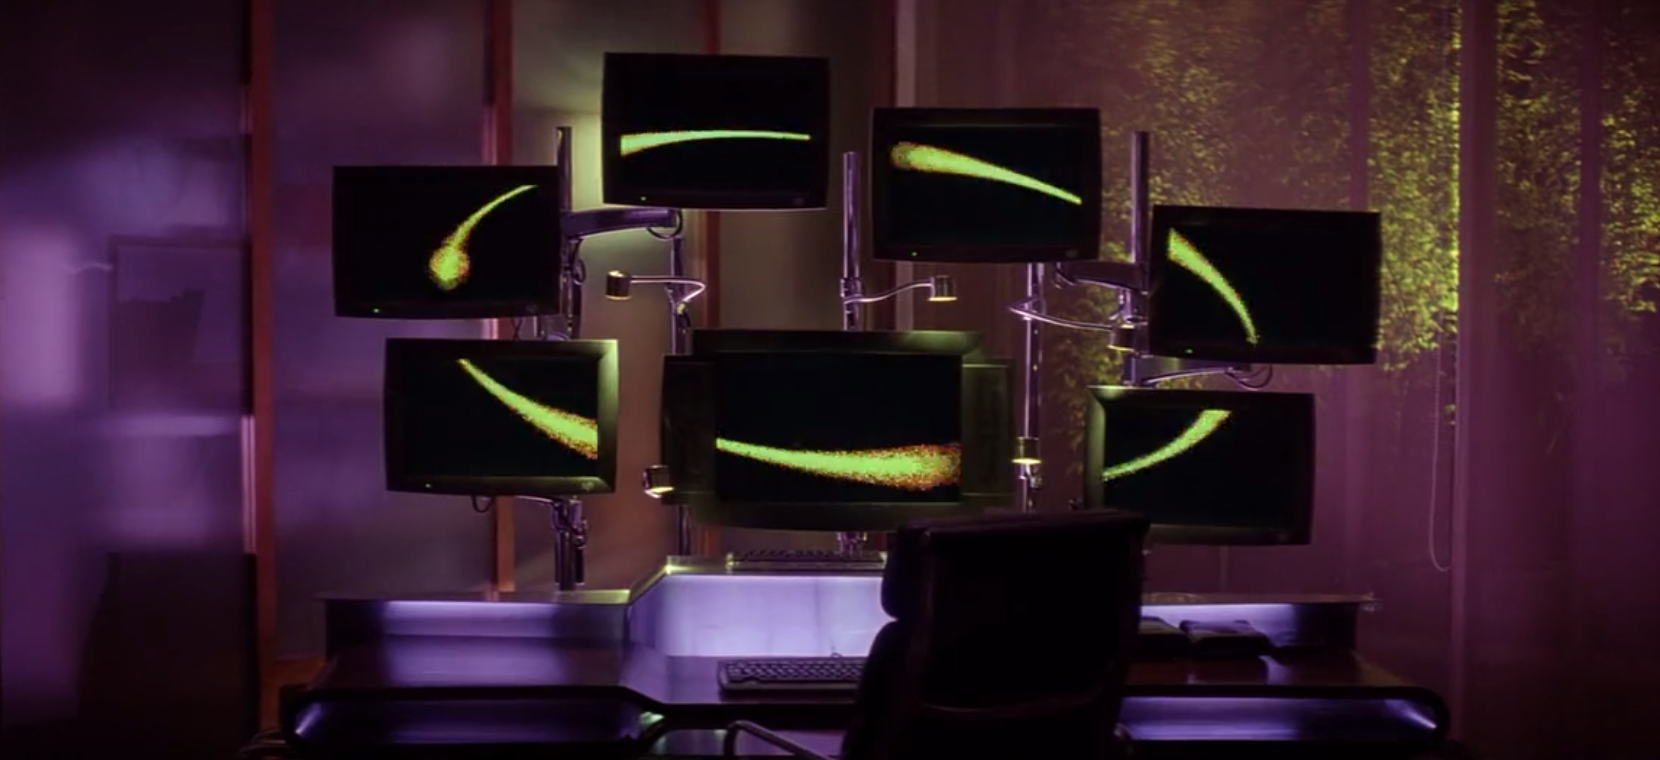 Some monitors on a desk